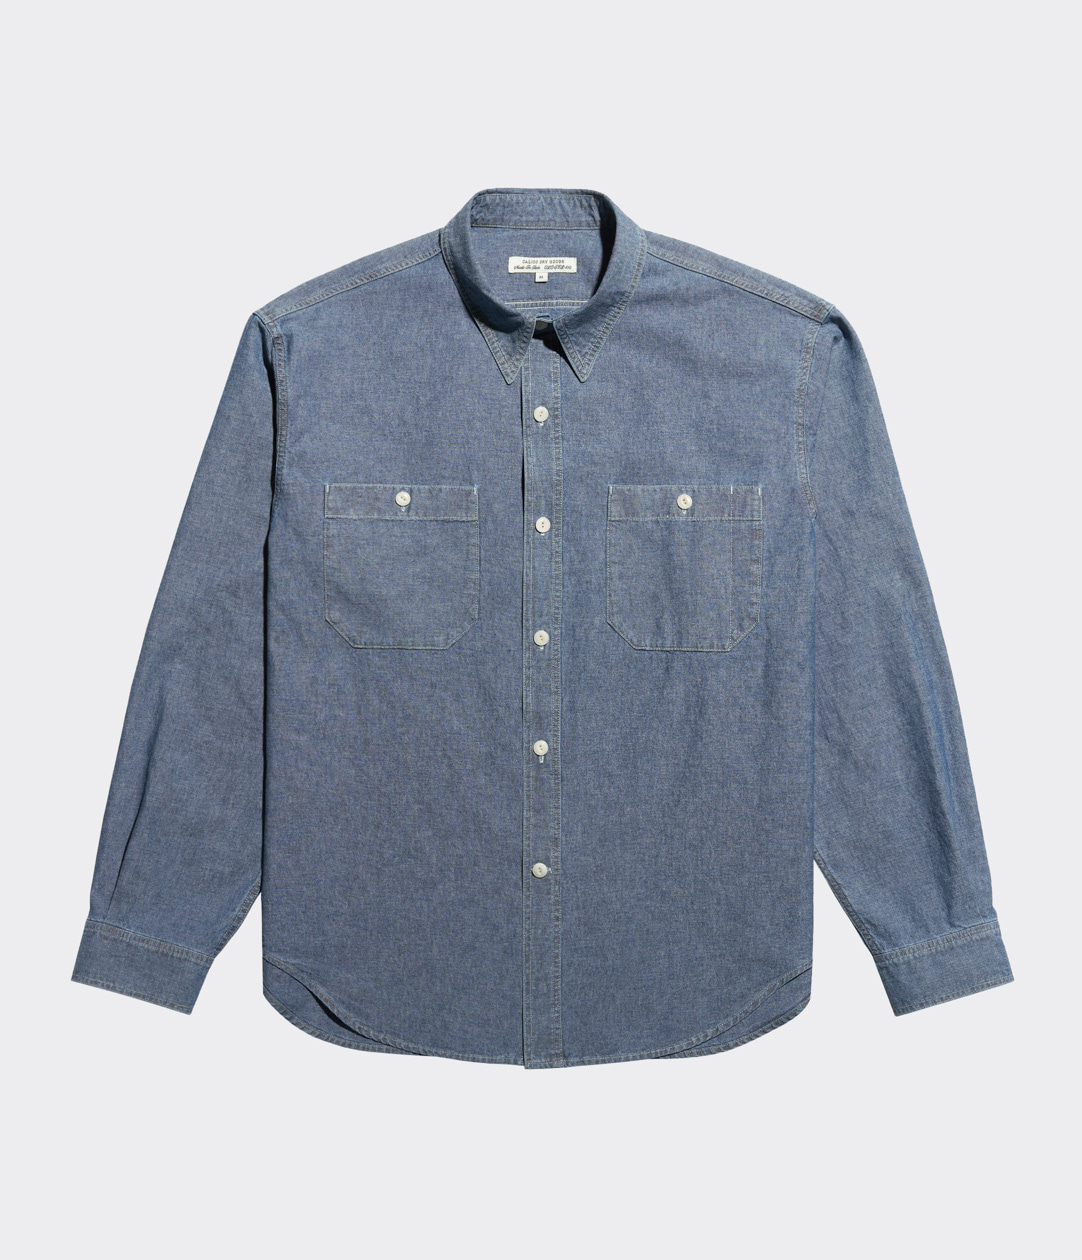 「Dry Goods」60s Work Shirt / Blue